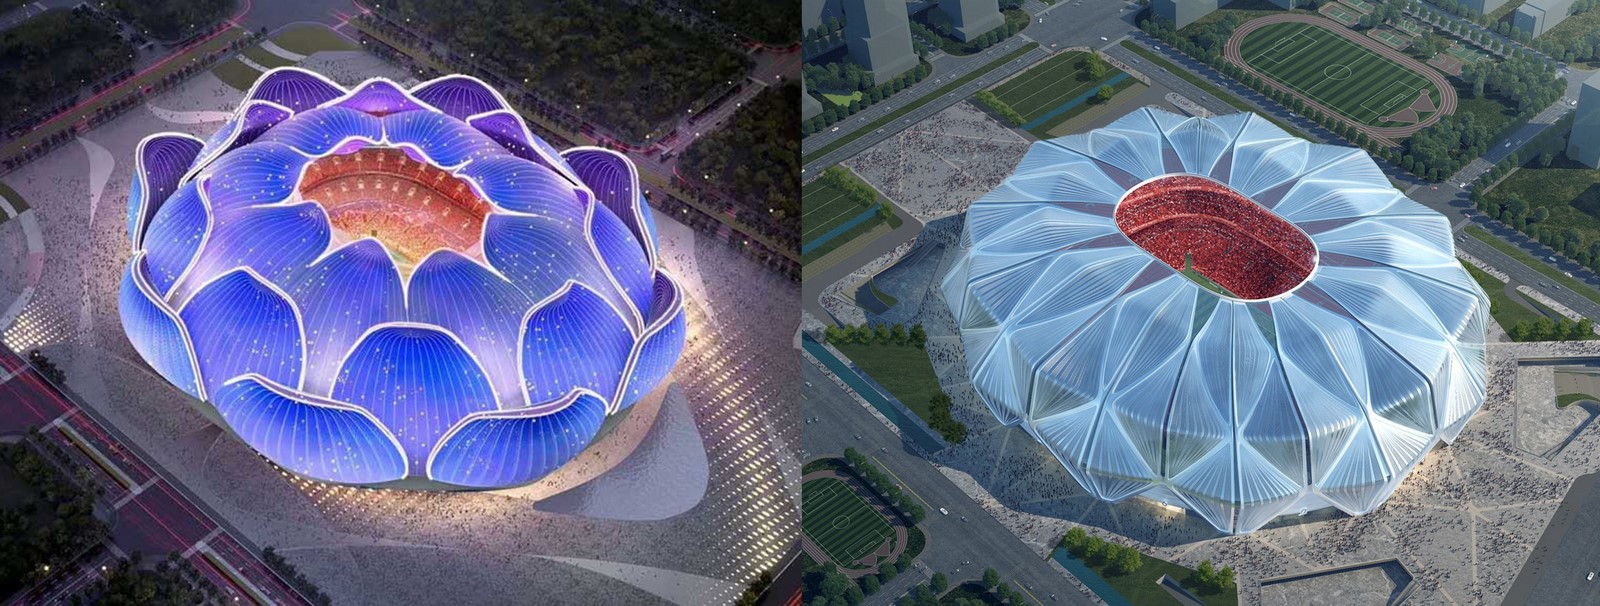 Guangzhou Football Stadium by Gensler: Iconic Landmark for Guangzhou’s Sports Industry - Sheet2